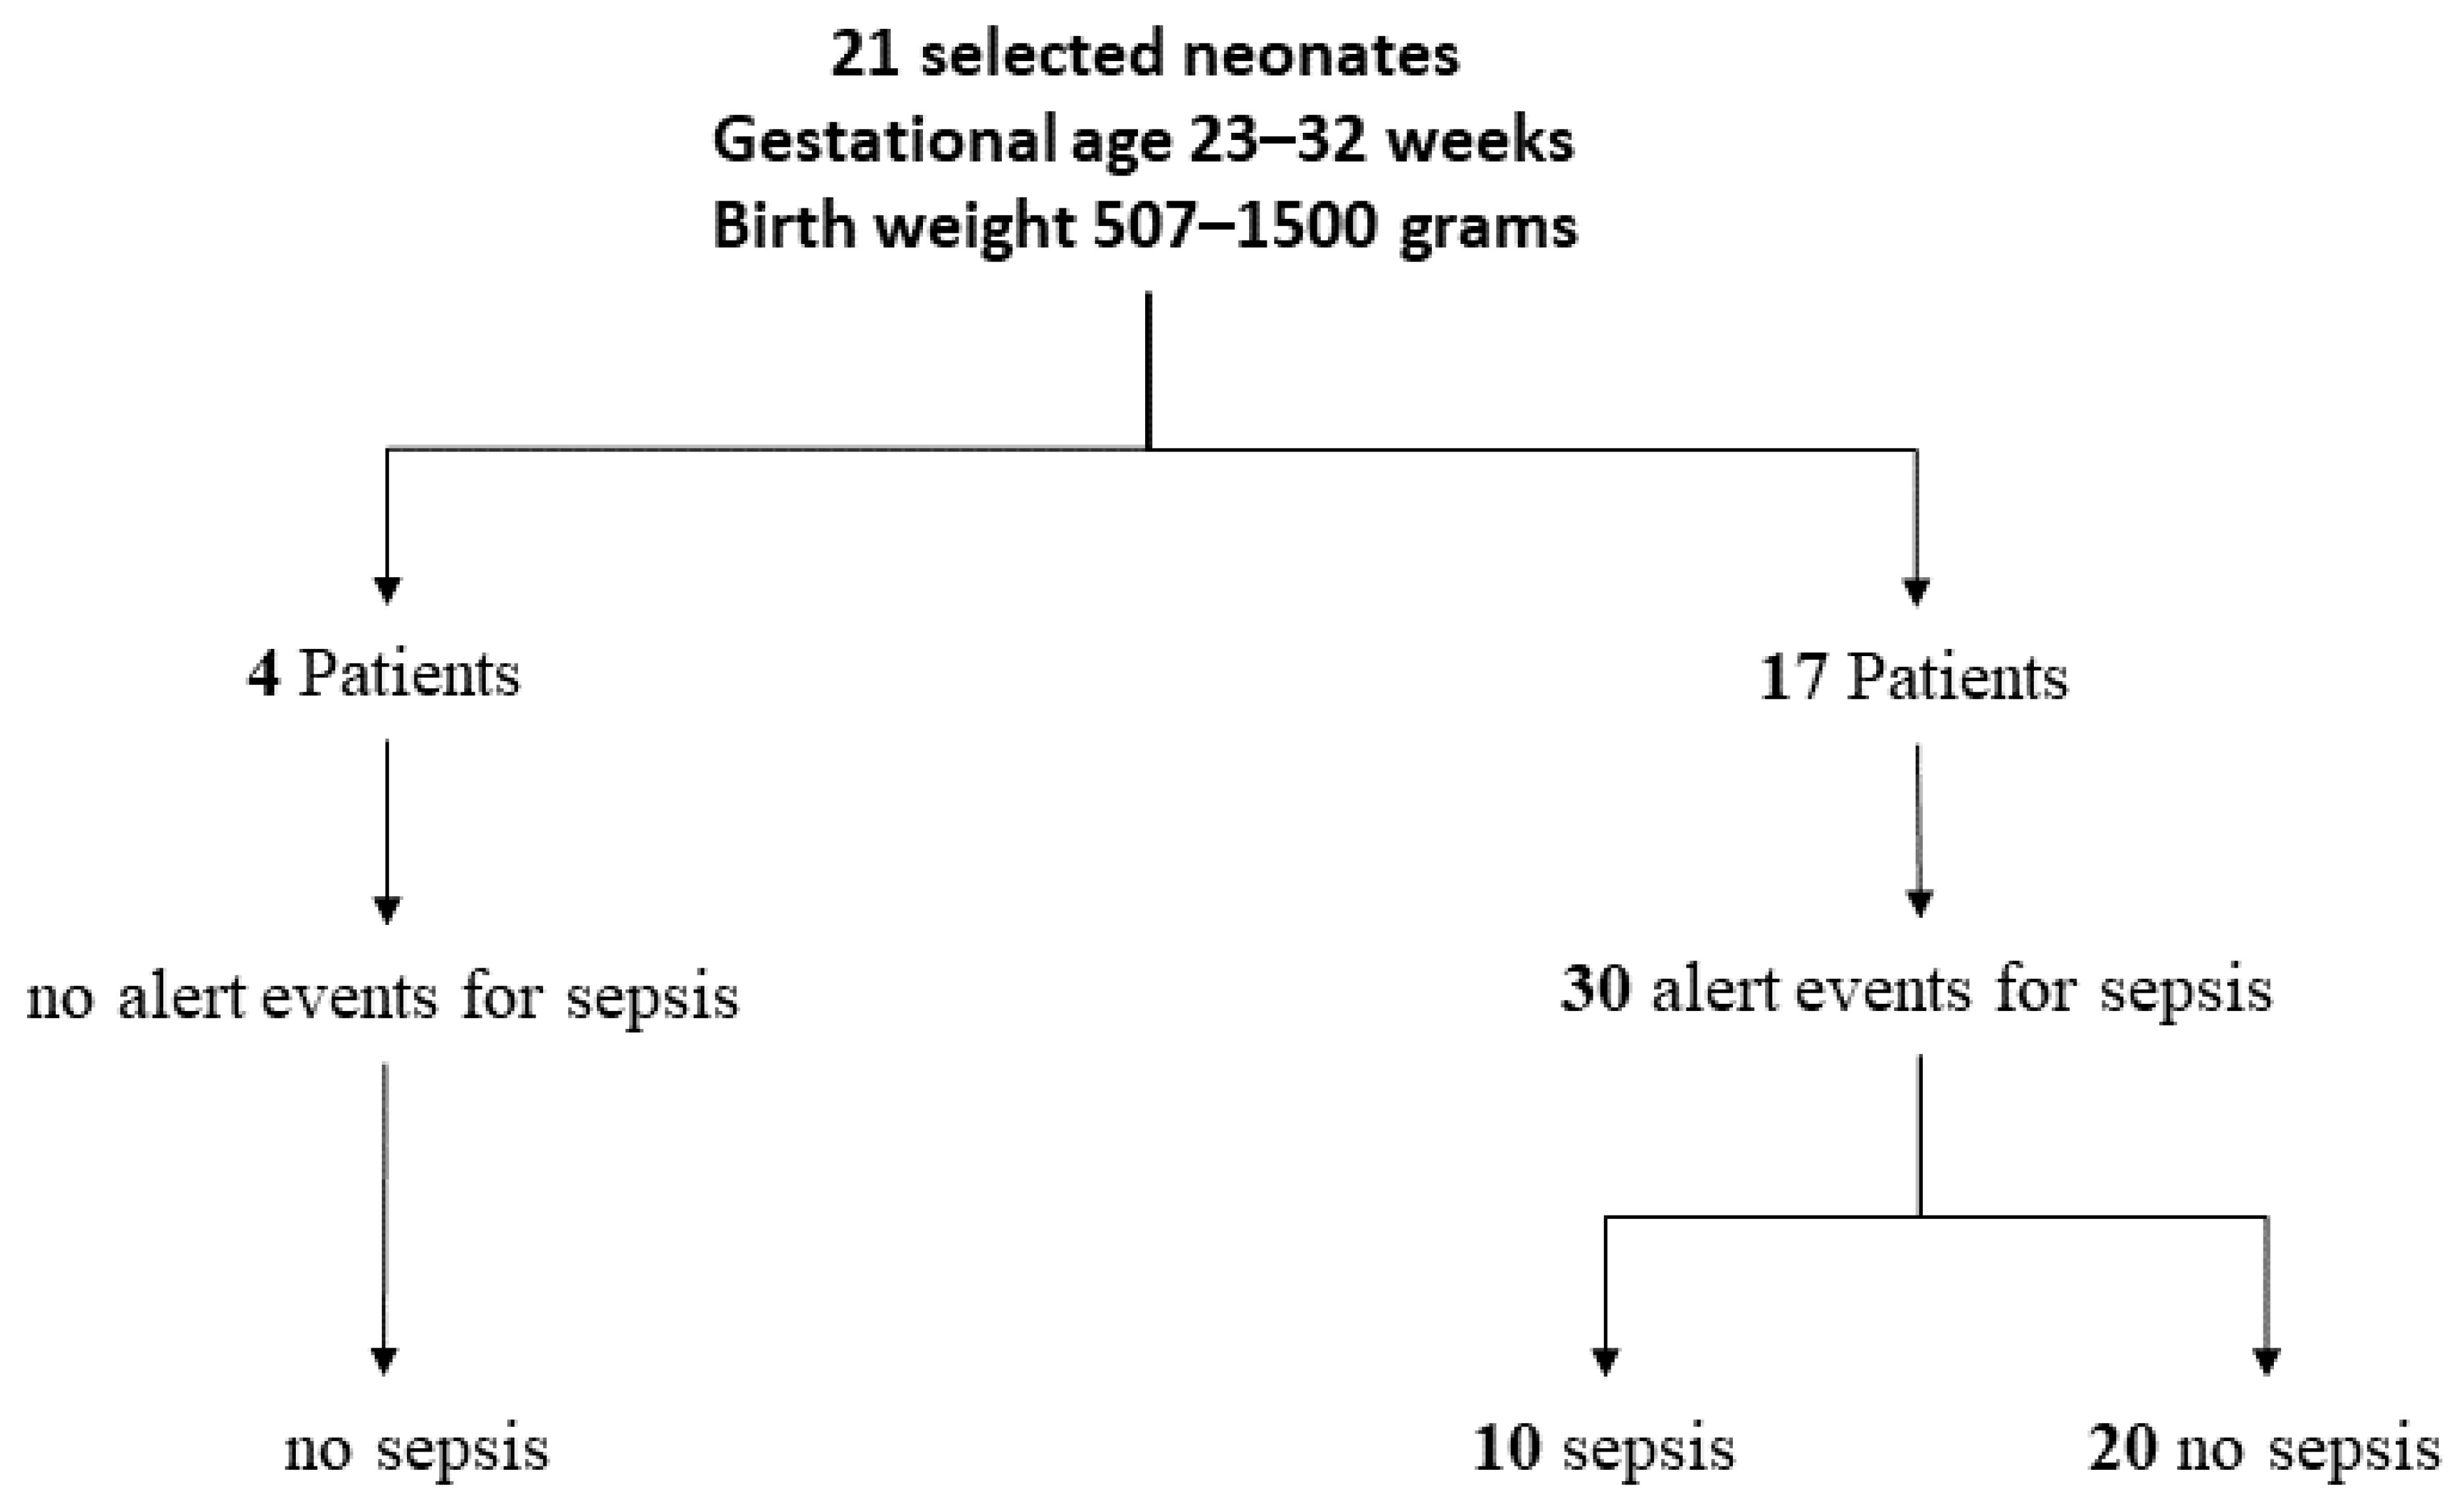 pathophysiology of sepsis neonatorum